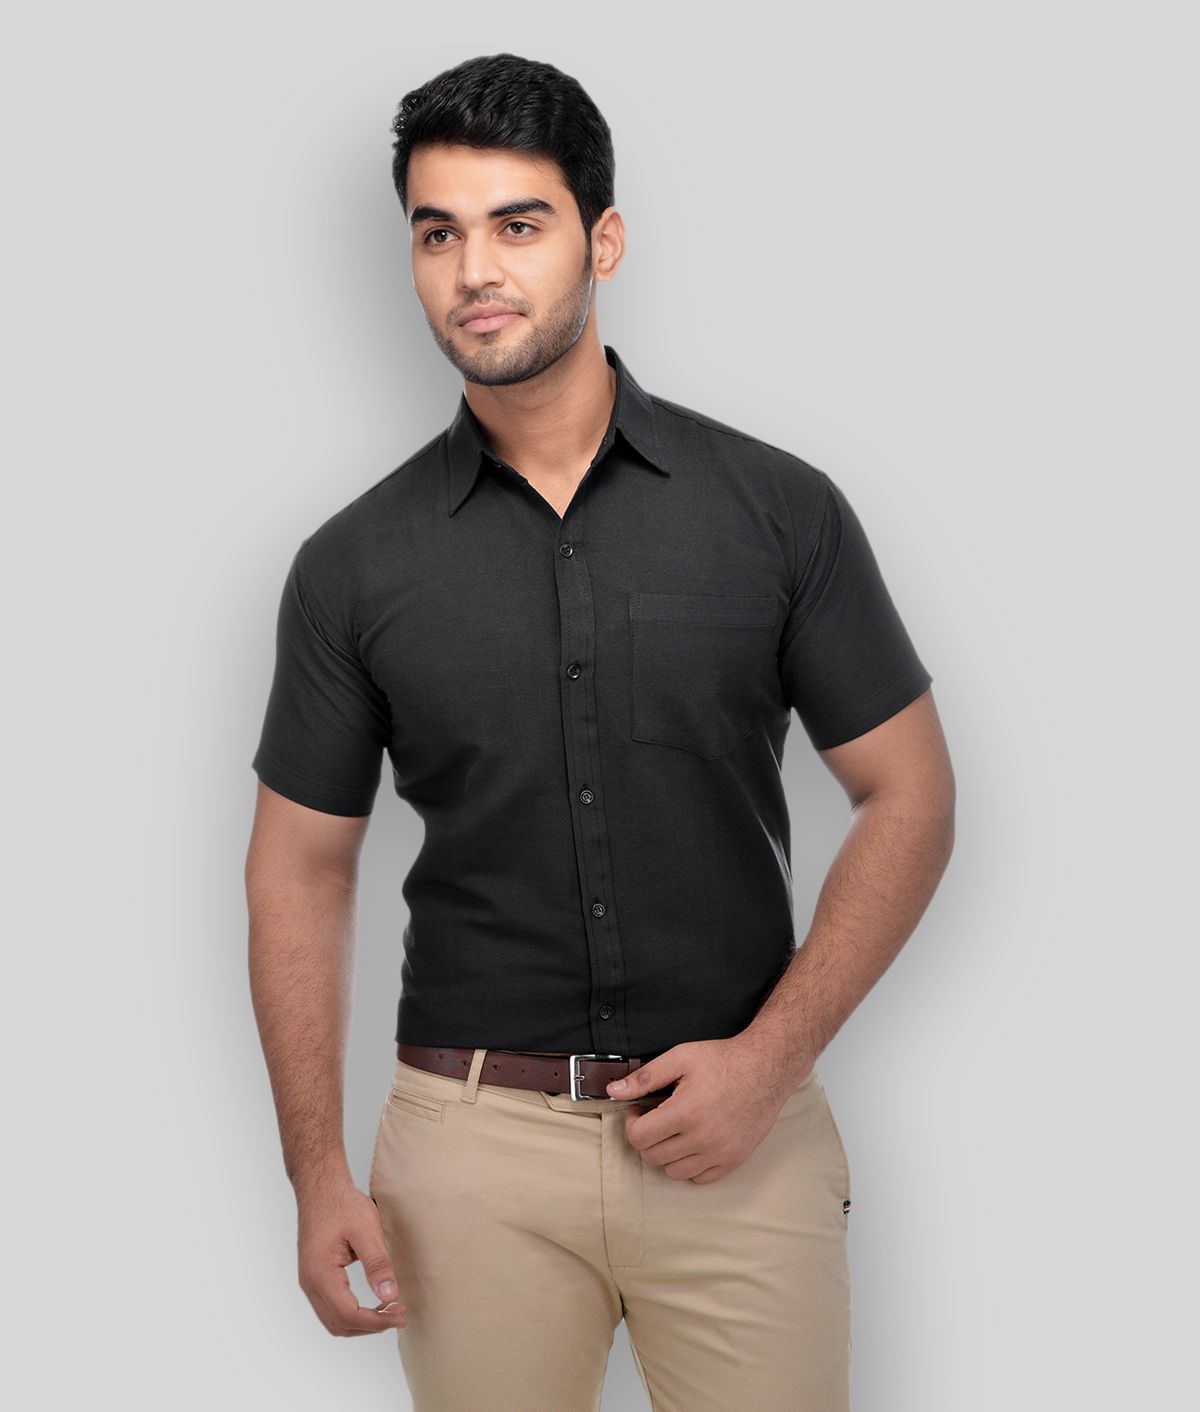     			RIAG - Black Cotton Regular Fit Men's Casual Shirt (Pack of 1 )